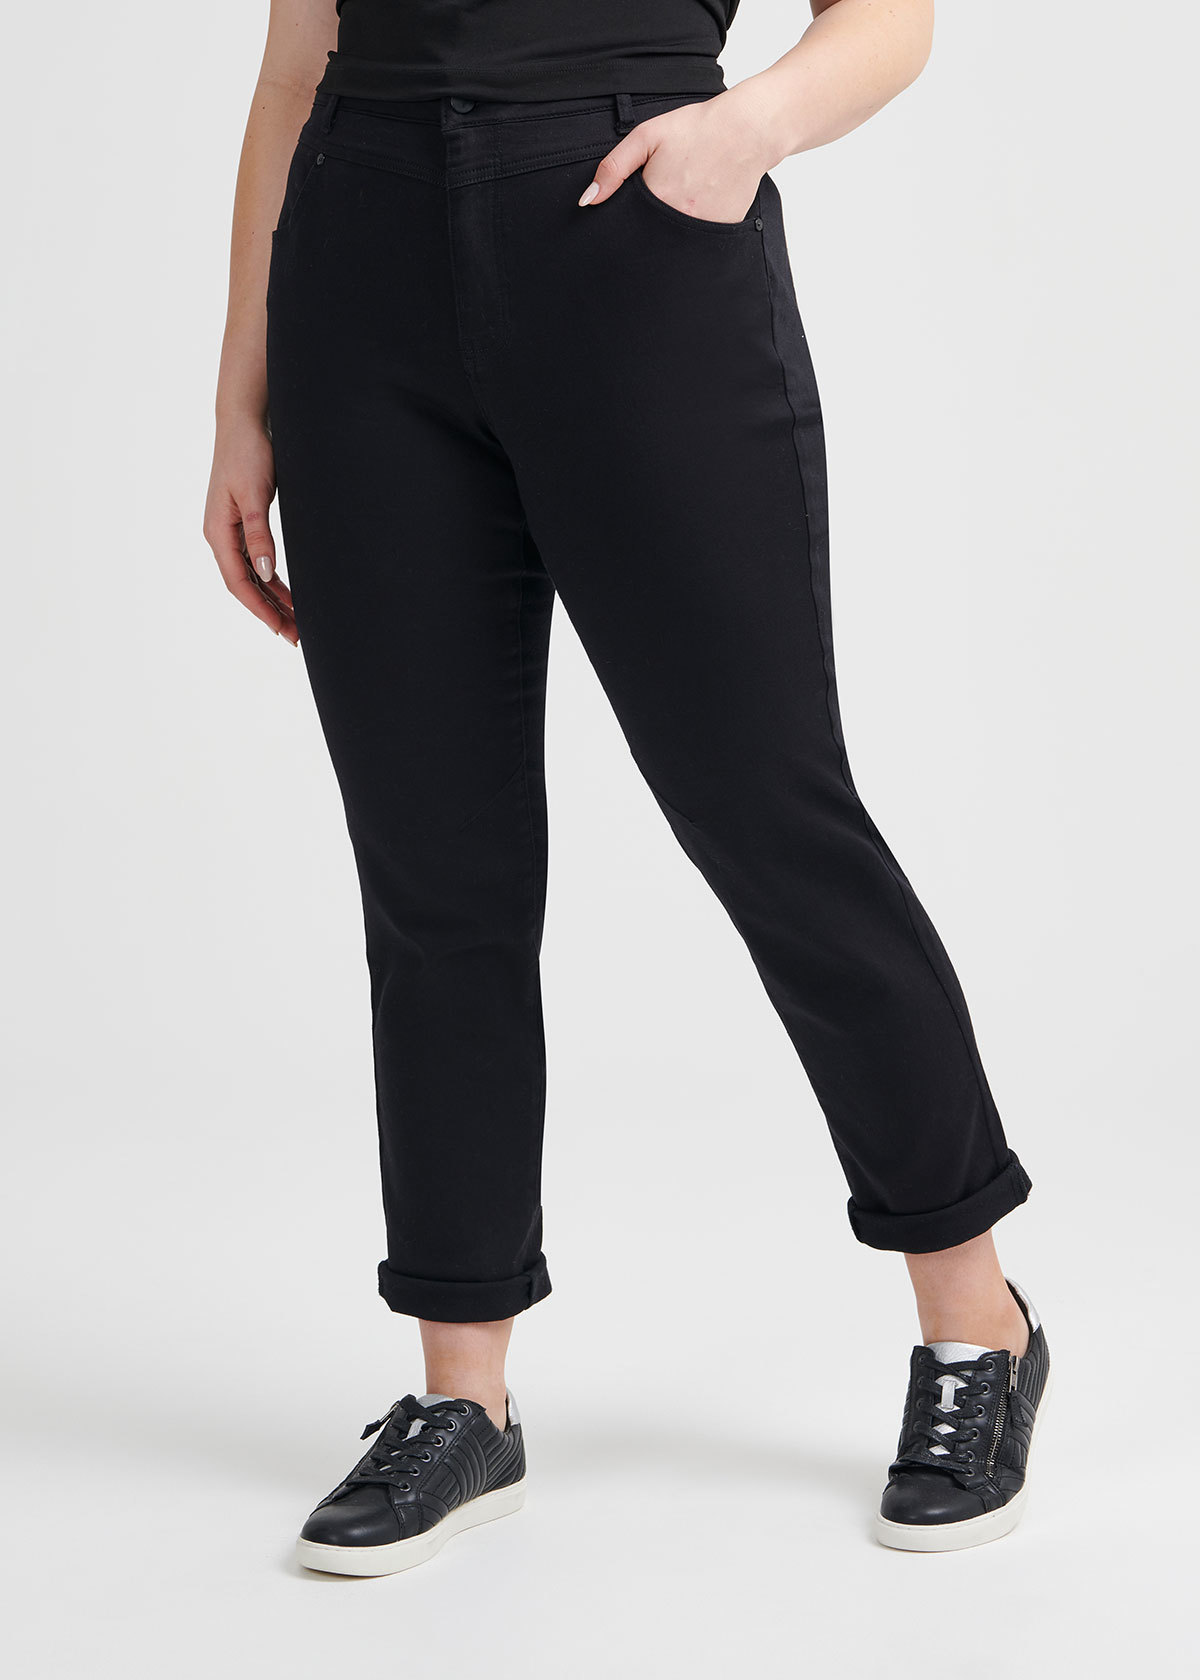 Shop Plus Size The Easy Fit Jean in Black | Sizes 12-30 | Taking Shape AU